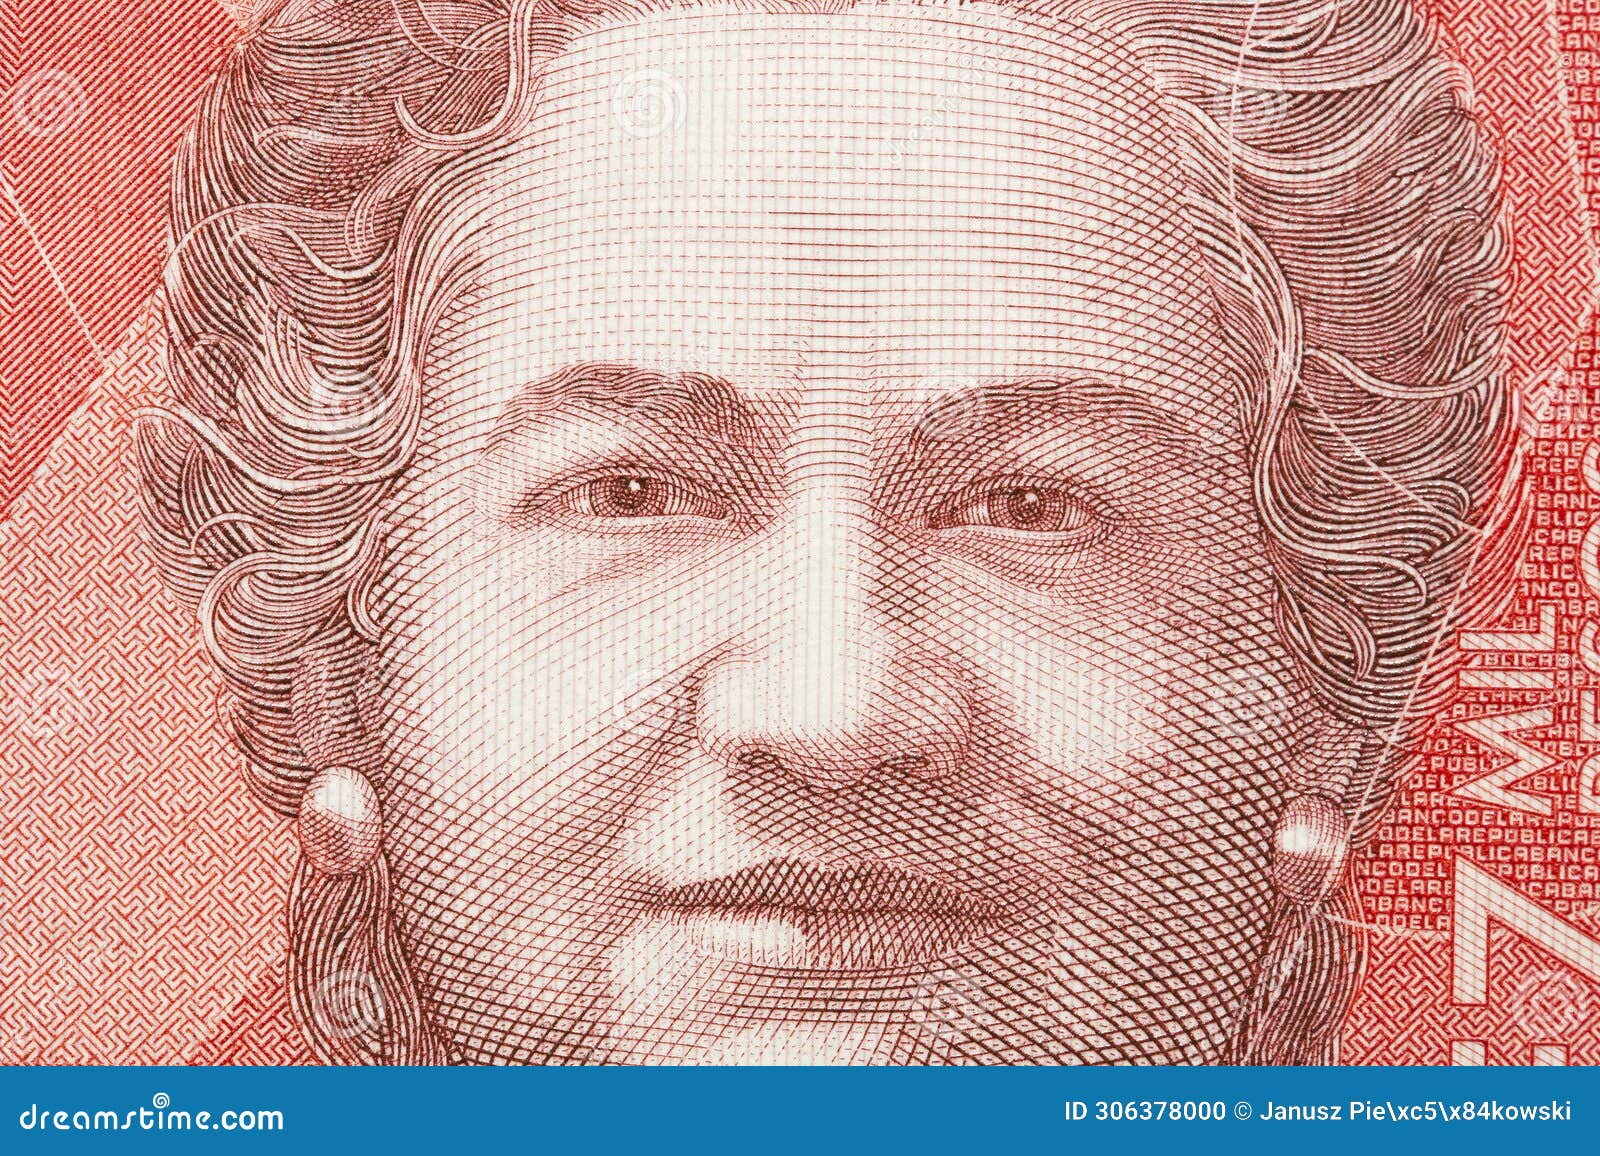 virginia gutierrez de pineda a closeup portrait from colombian money